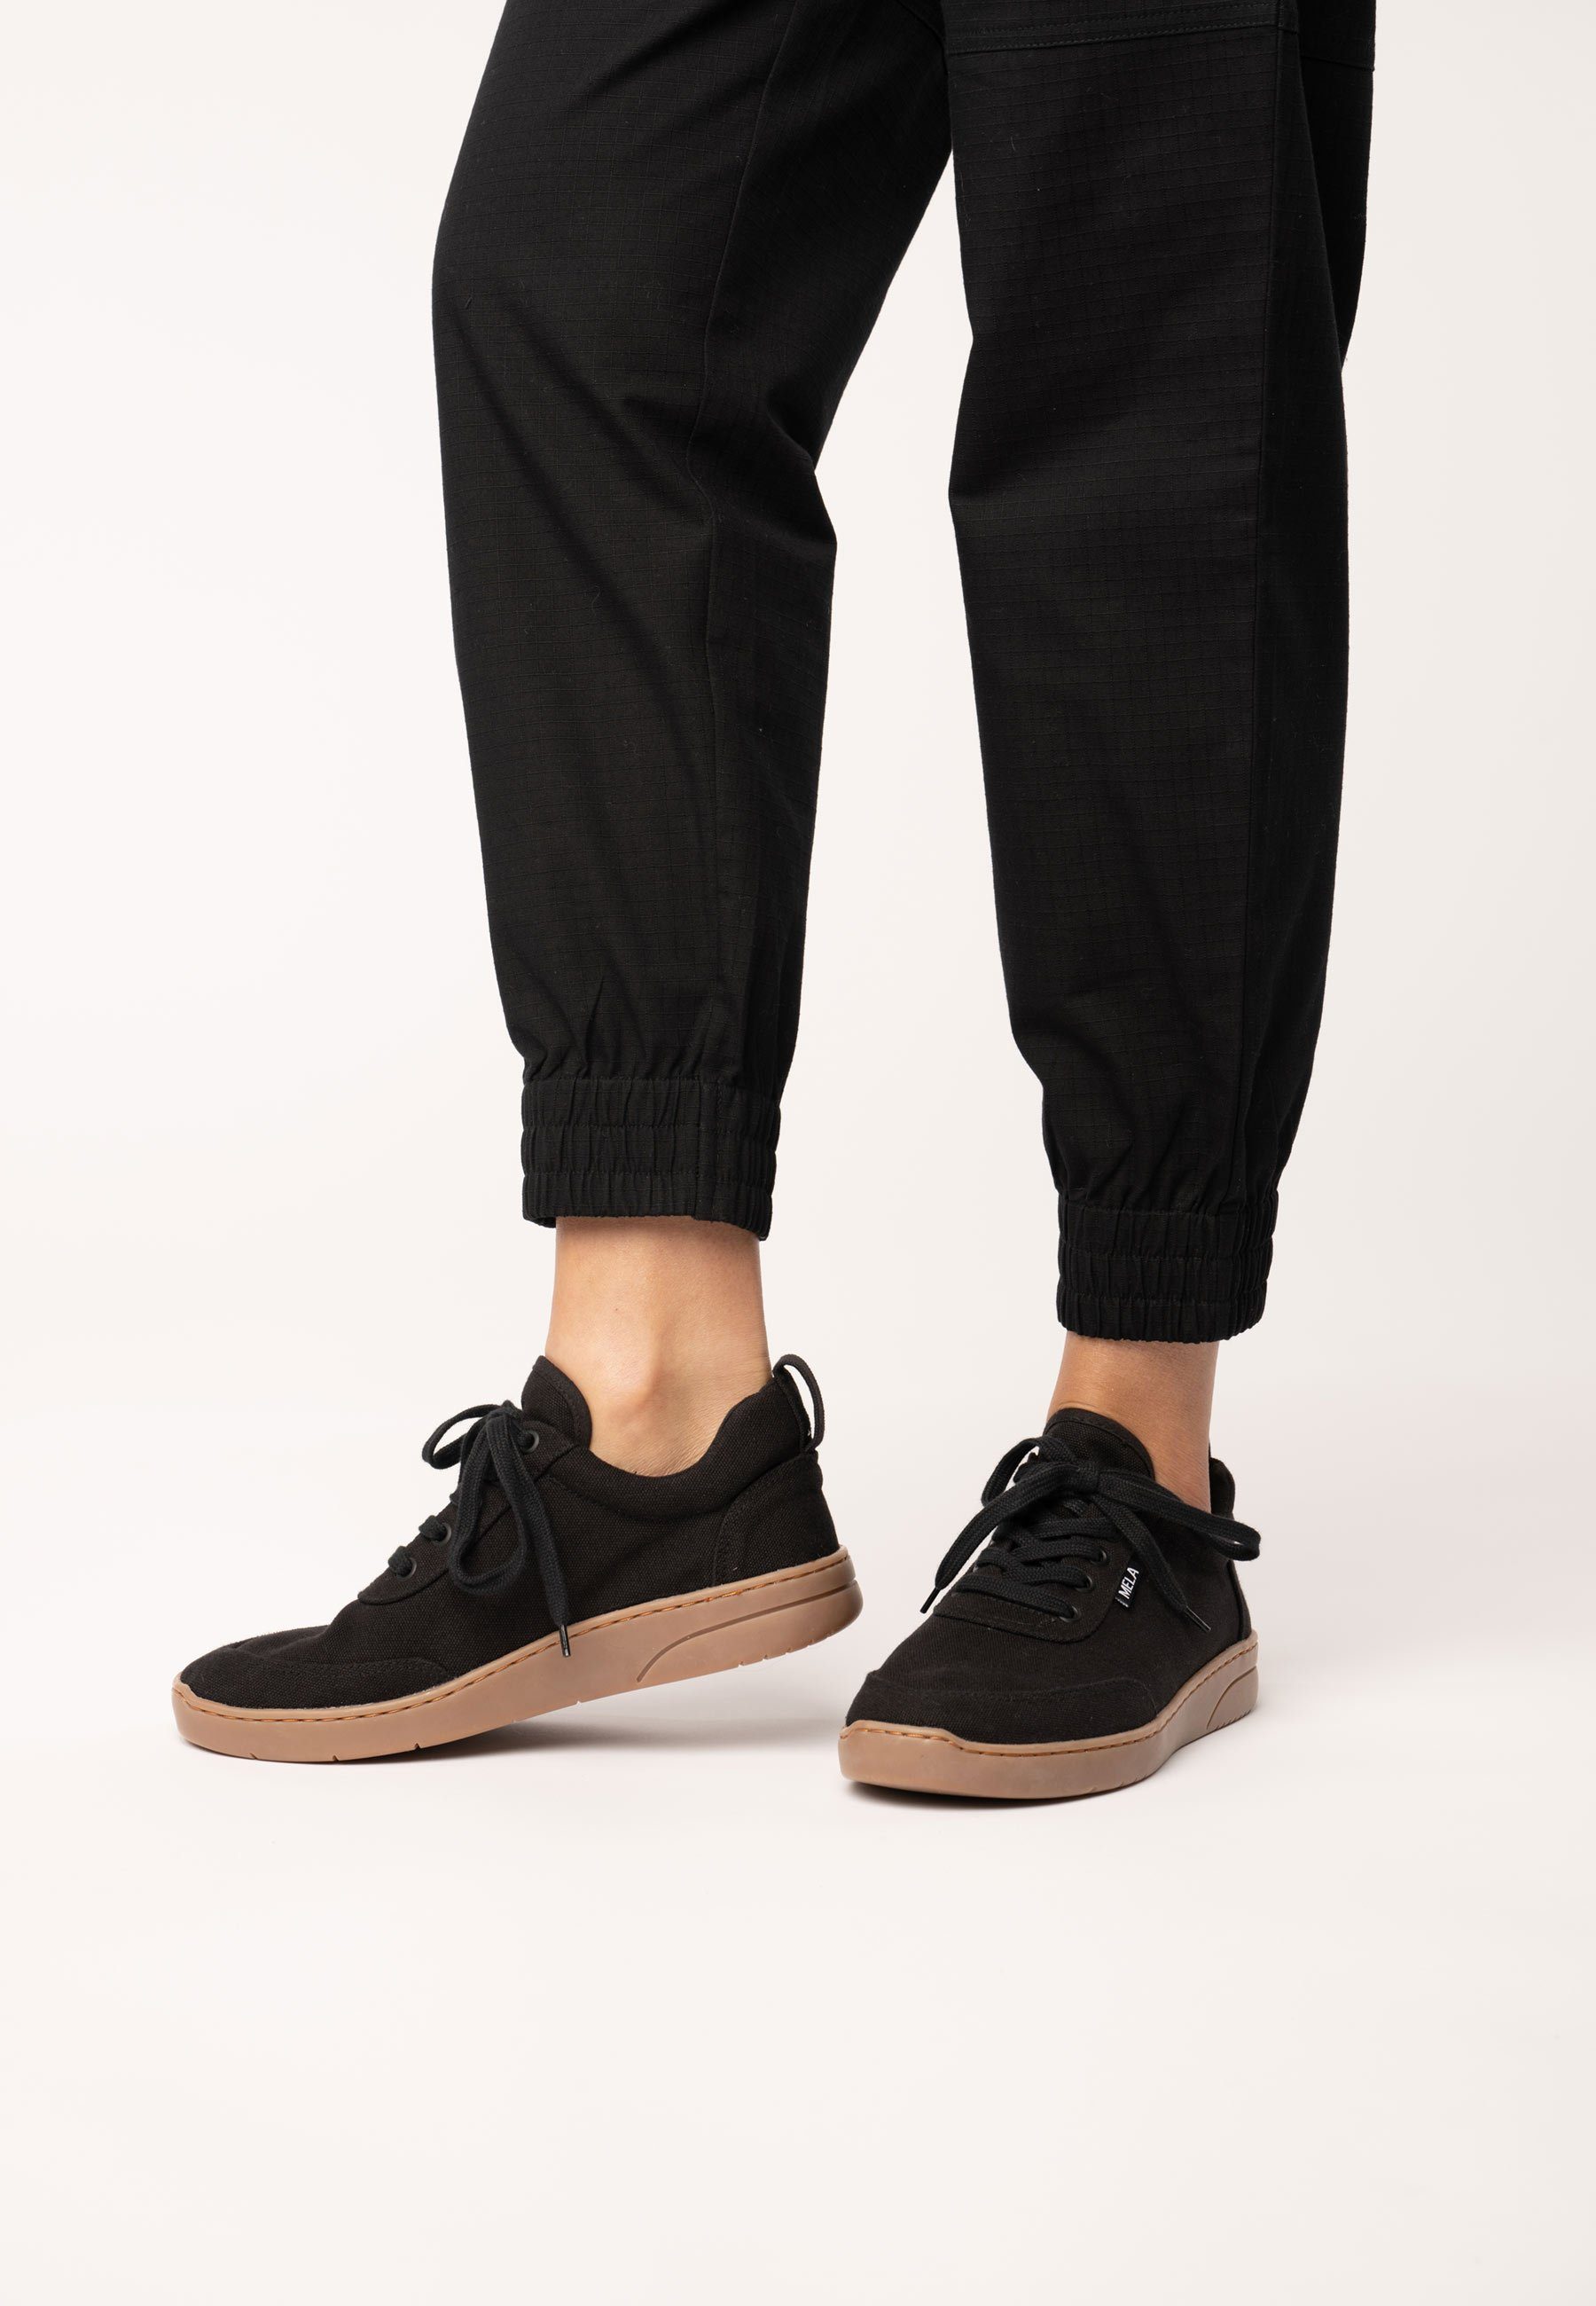 MELA Damen Schnürsenkel / inklusive zusätzlichem Sneaker gum schwarz YALA Paar Sneaker